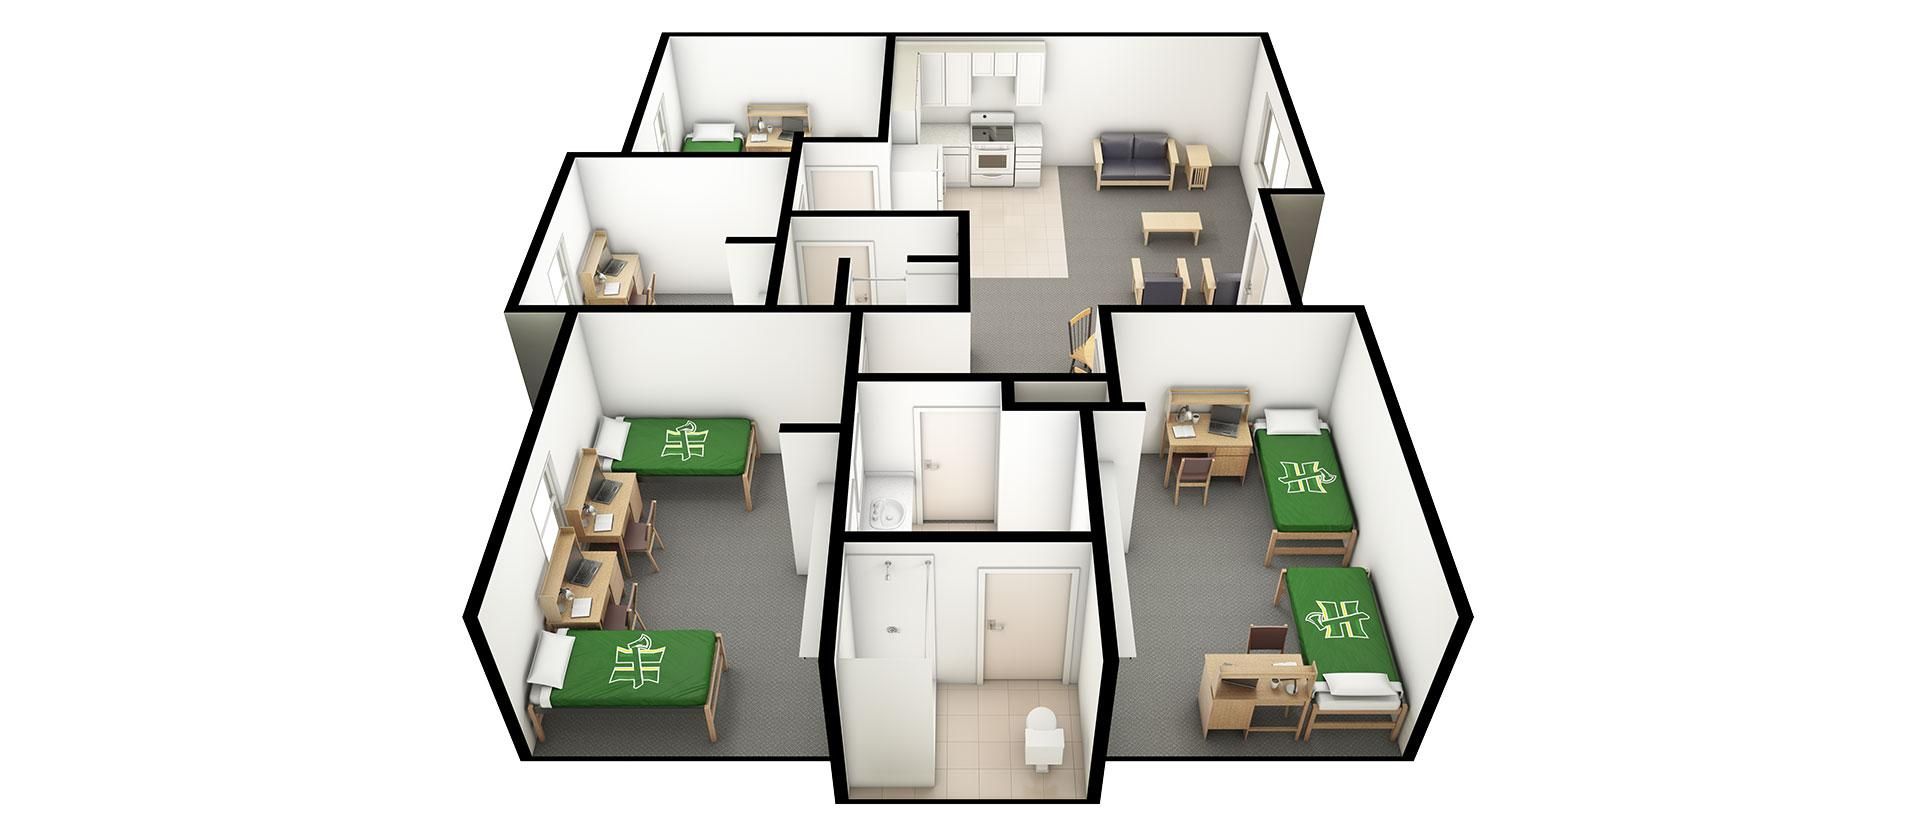 College Creek Apartment Floor Plan (6 residents)